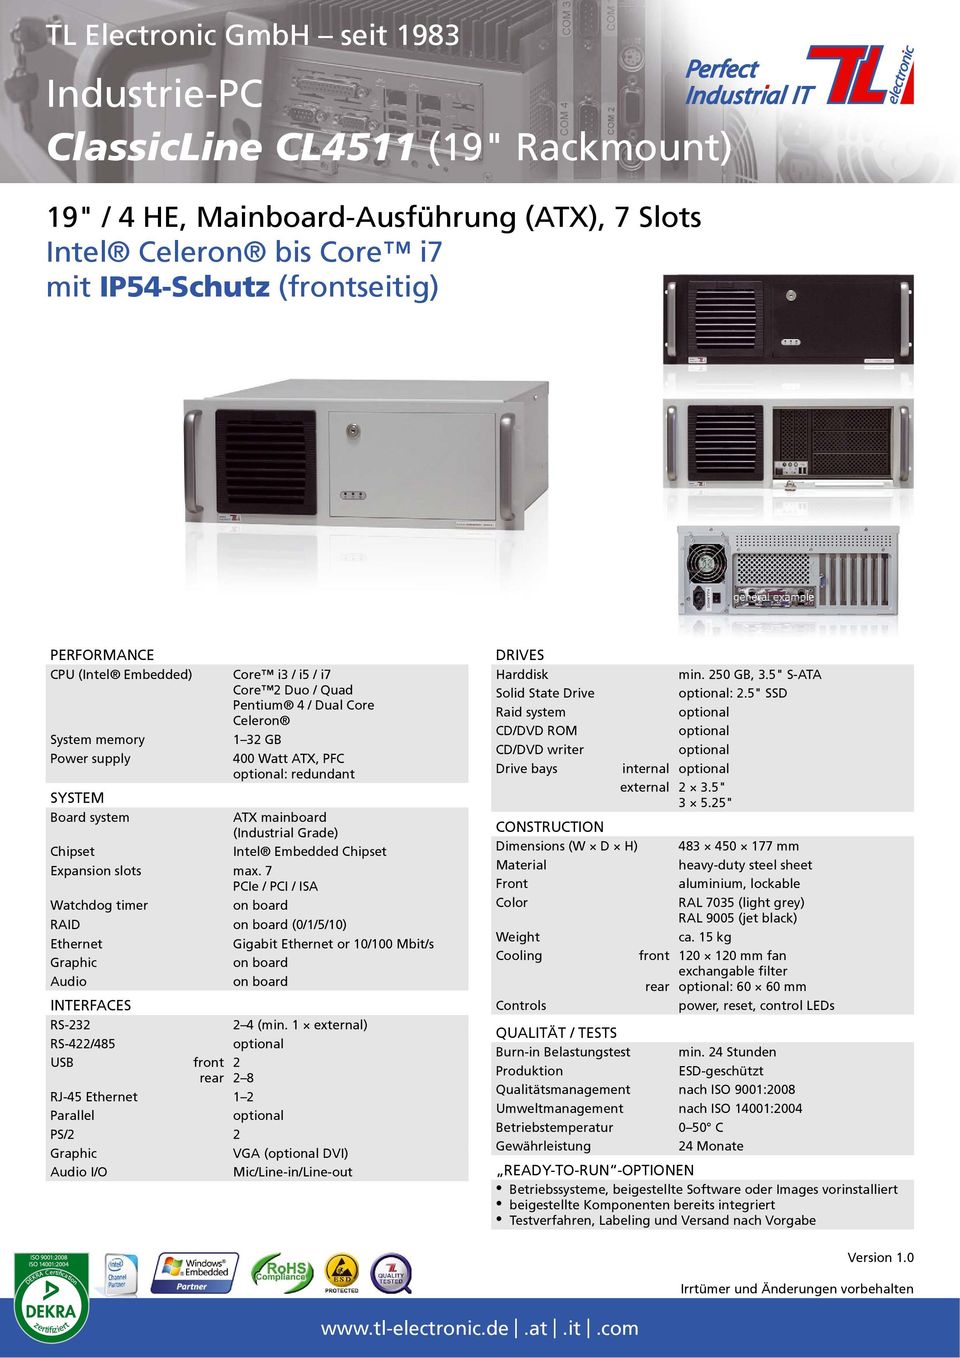 slots max. 7 PCIe / PCI / ISA Watchdog timer RAID (0/1/5/10) Gigabit or 10/100 Mbit/s INTERFACES RS-232 2 4 (min.